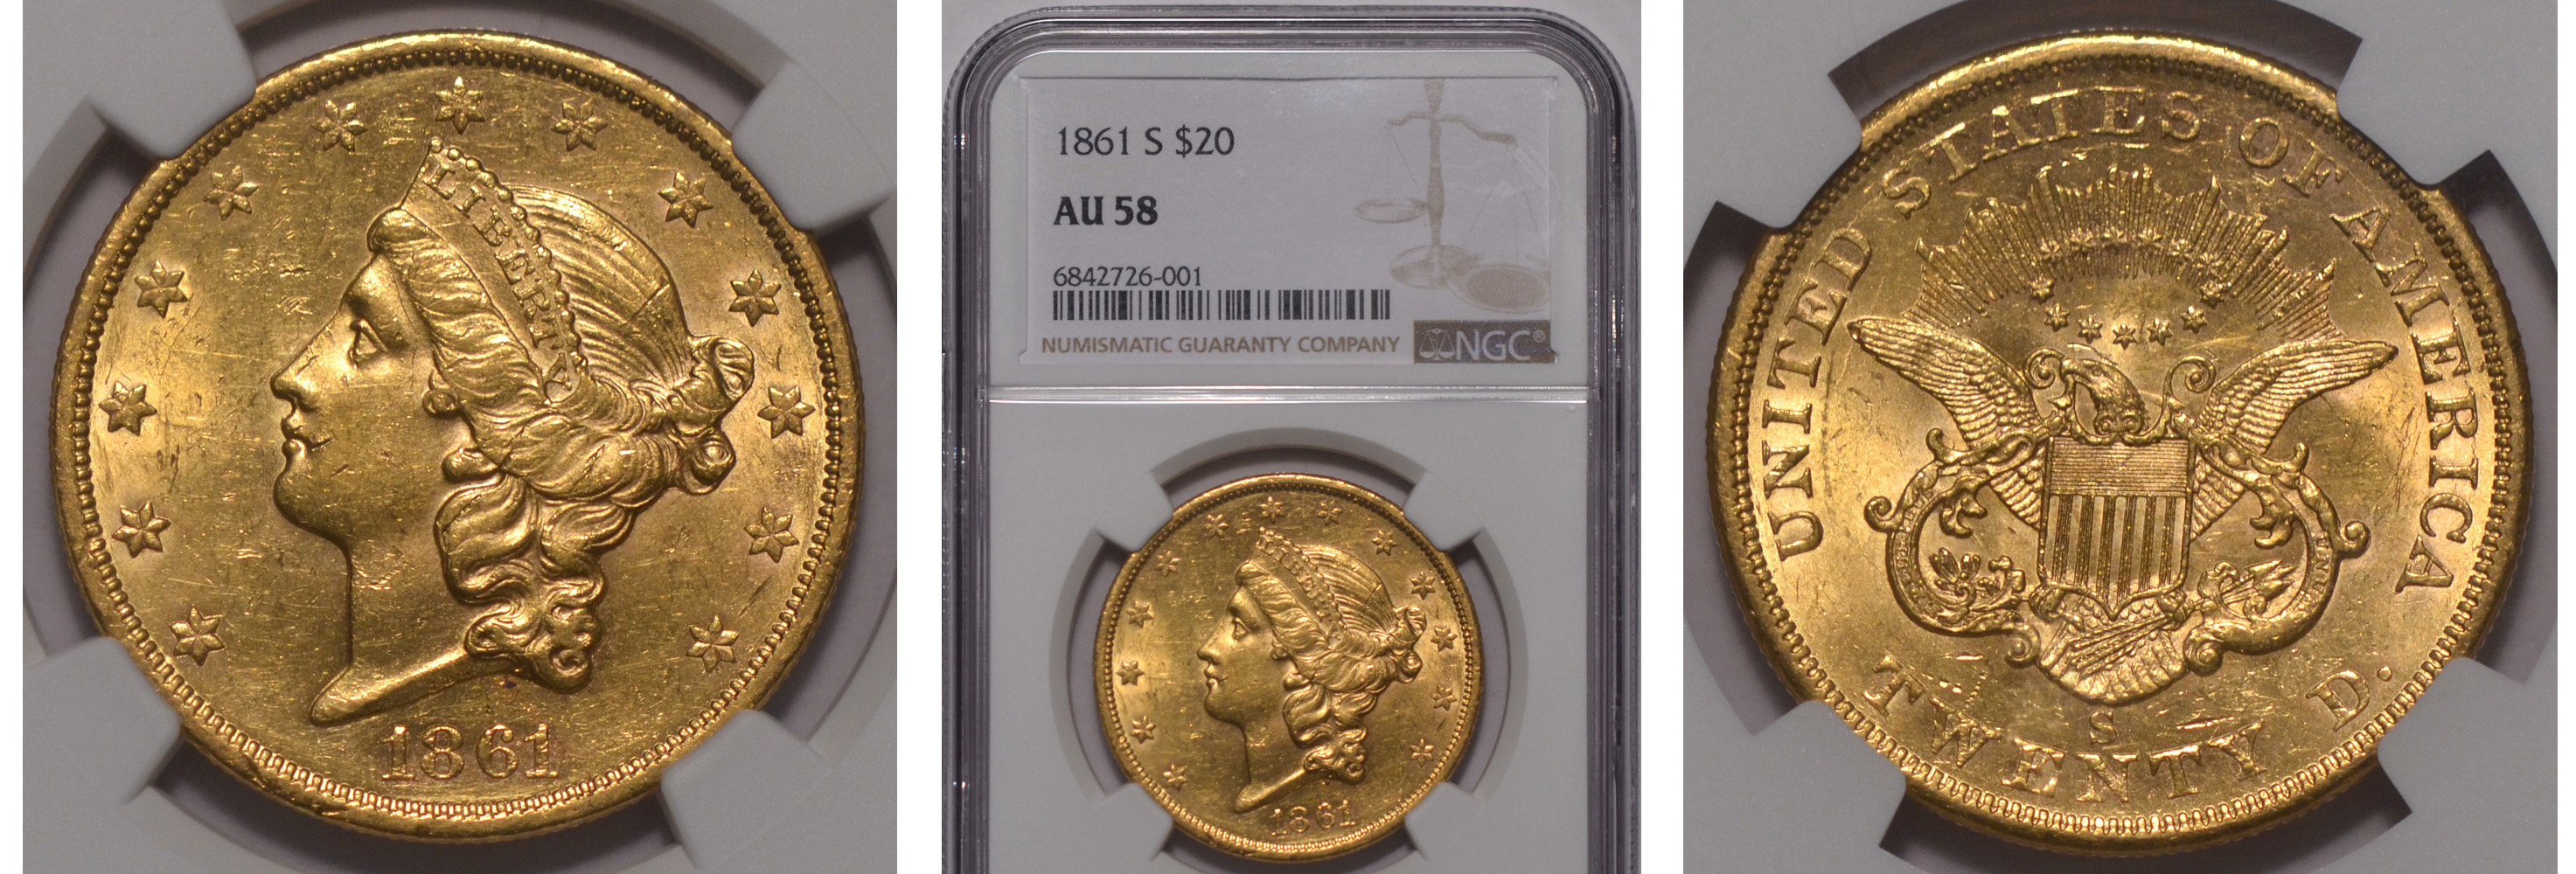 1861-S Gold Double Eagle $20 NGC AU58